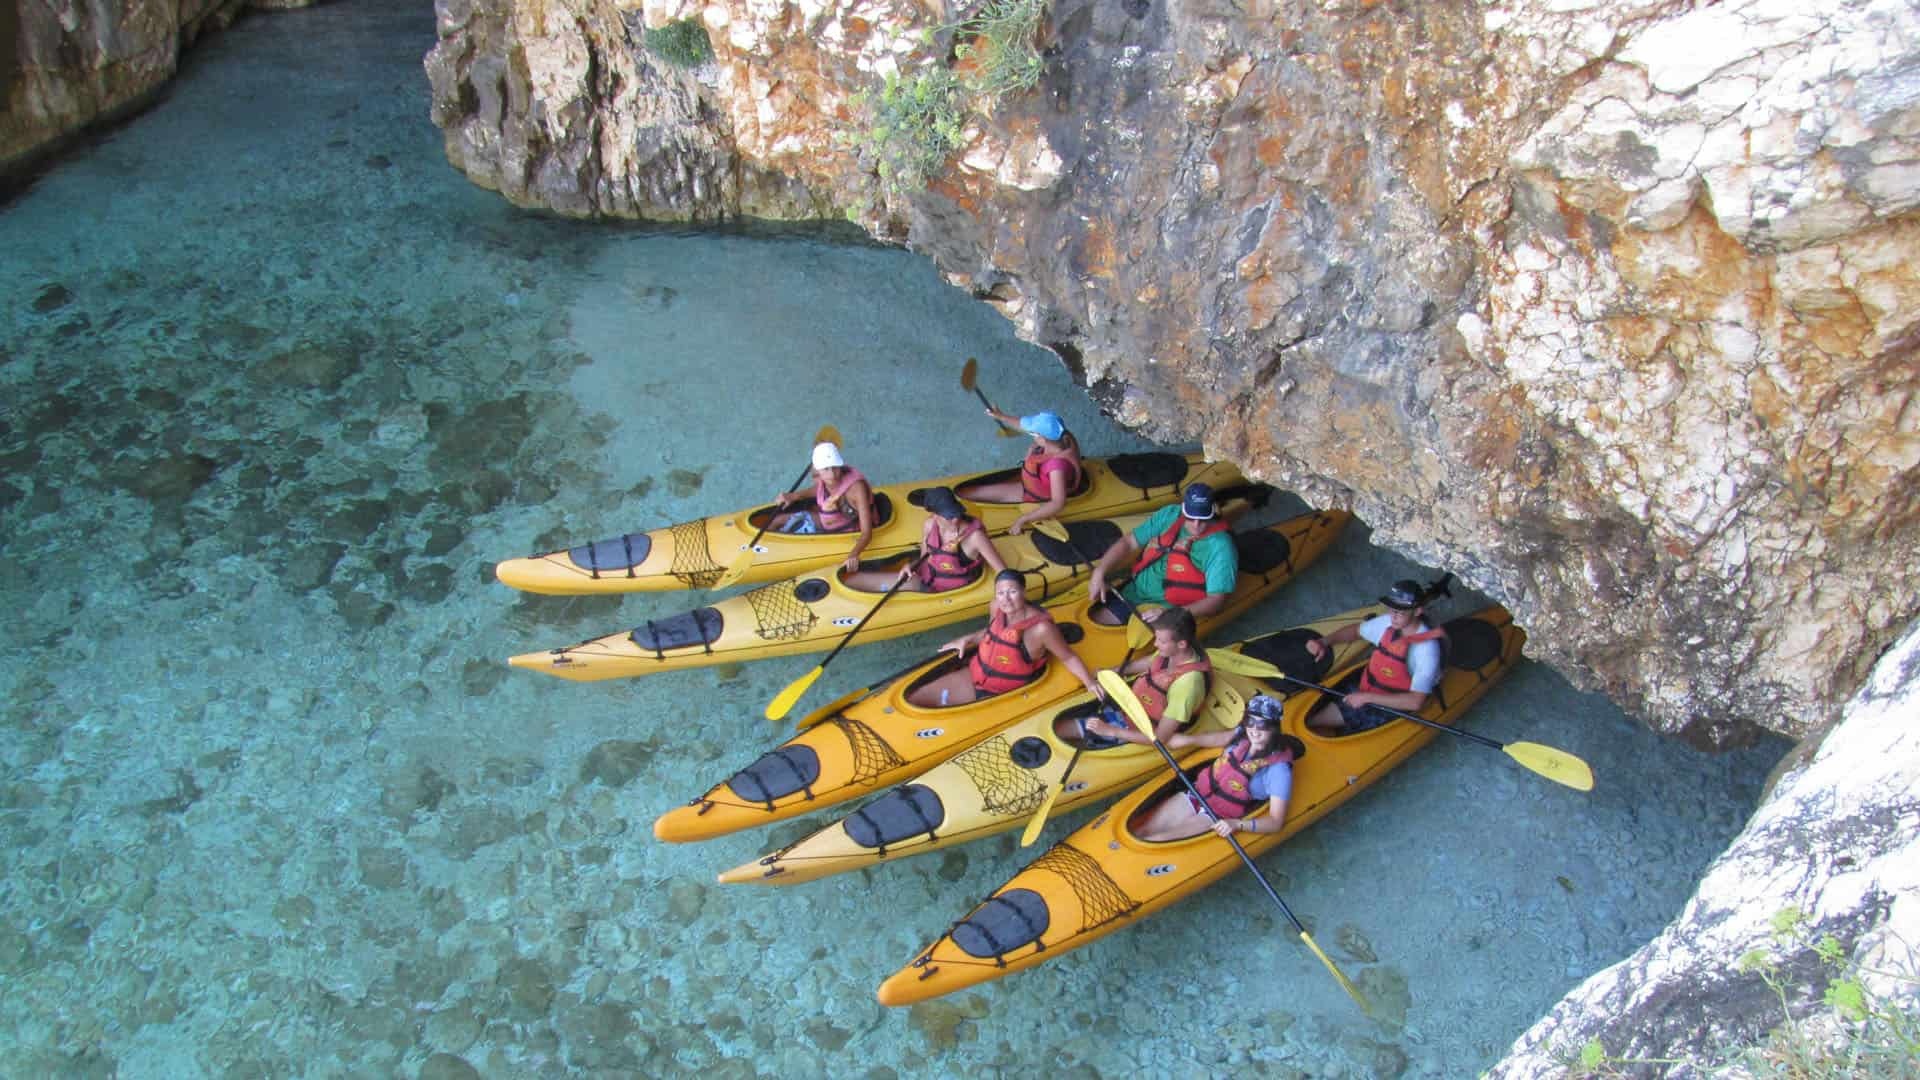 Kayaking: Rab Island group boating adventure, Small watercraft trips in Croatia. 1920x1080 Full HD Wallpaper.